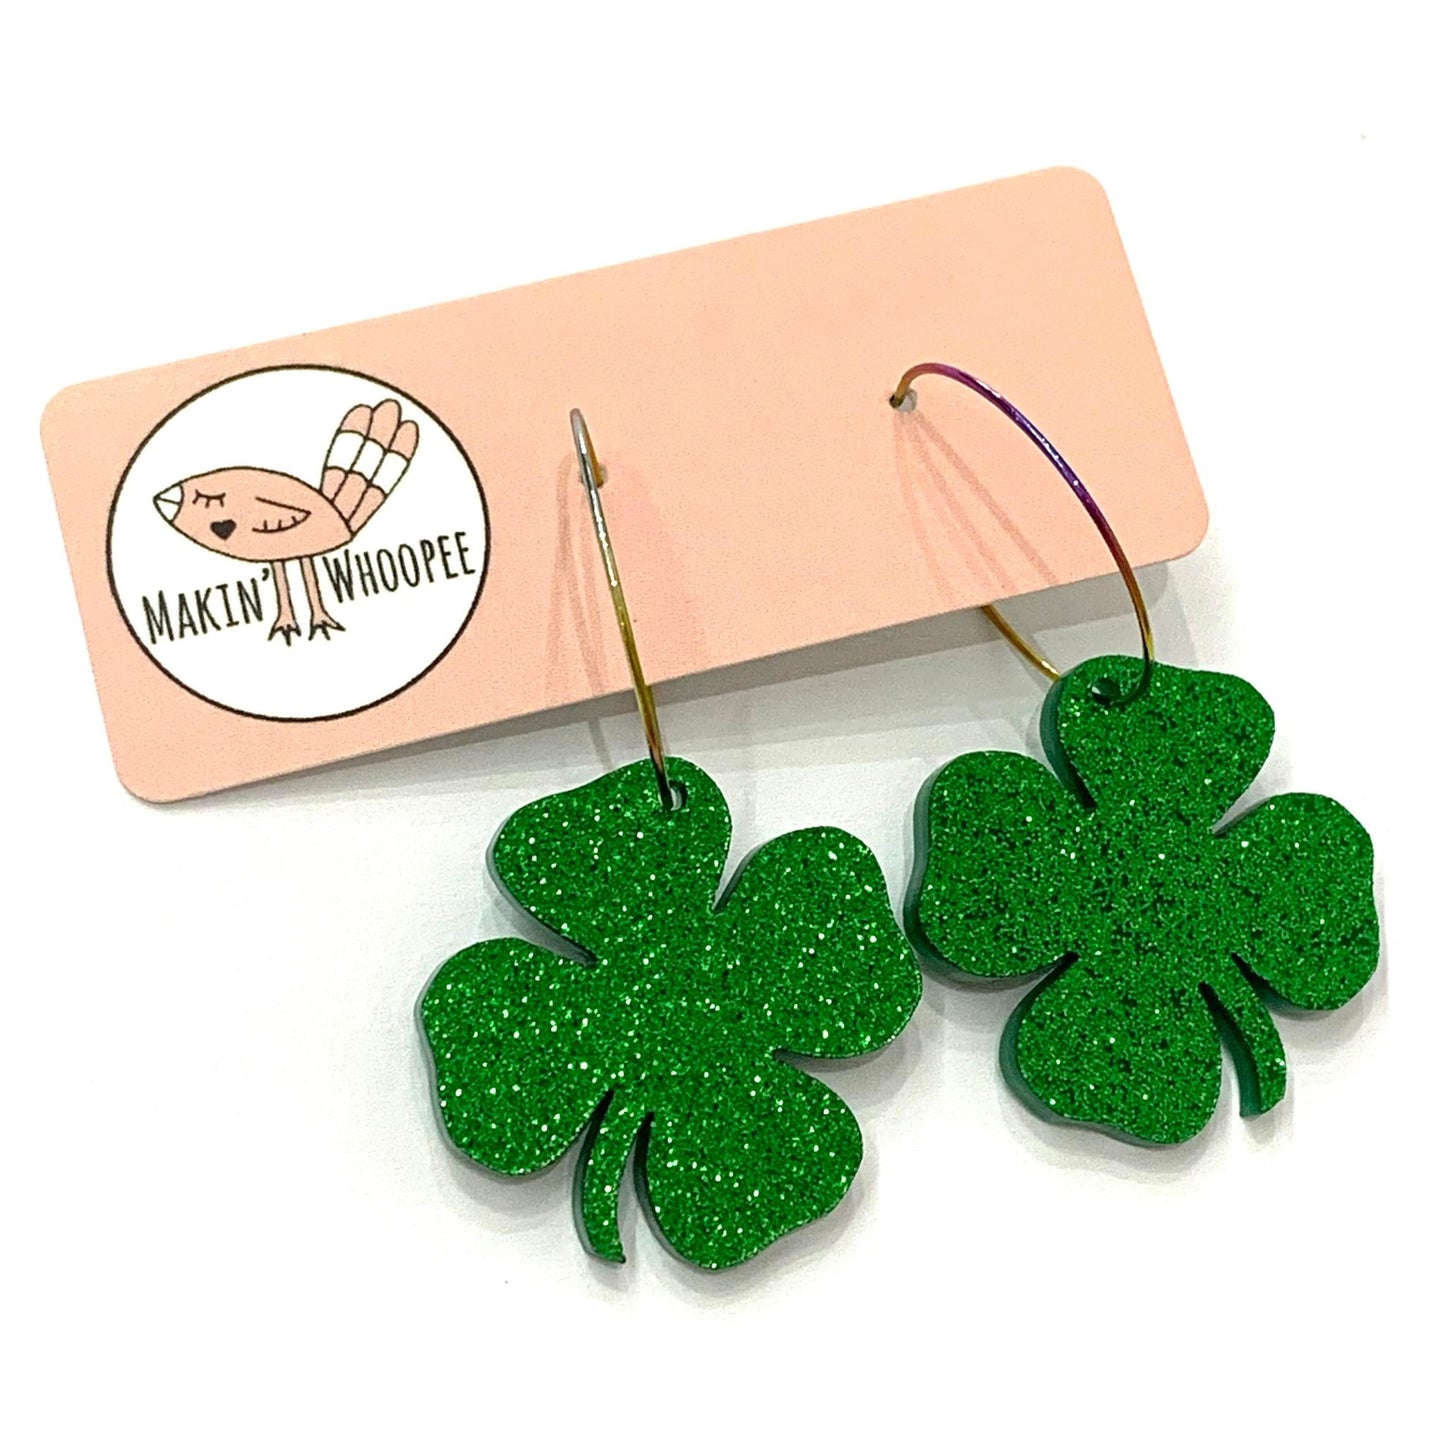 MAKIN' WHOOPEE - Small Irish Green Lucky Clover Hoop Dangle Earrings